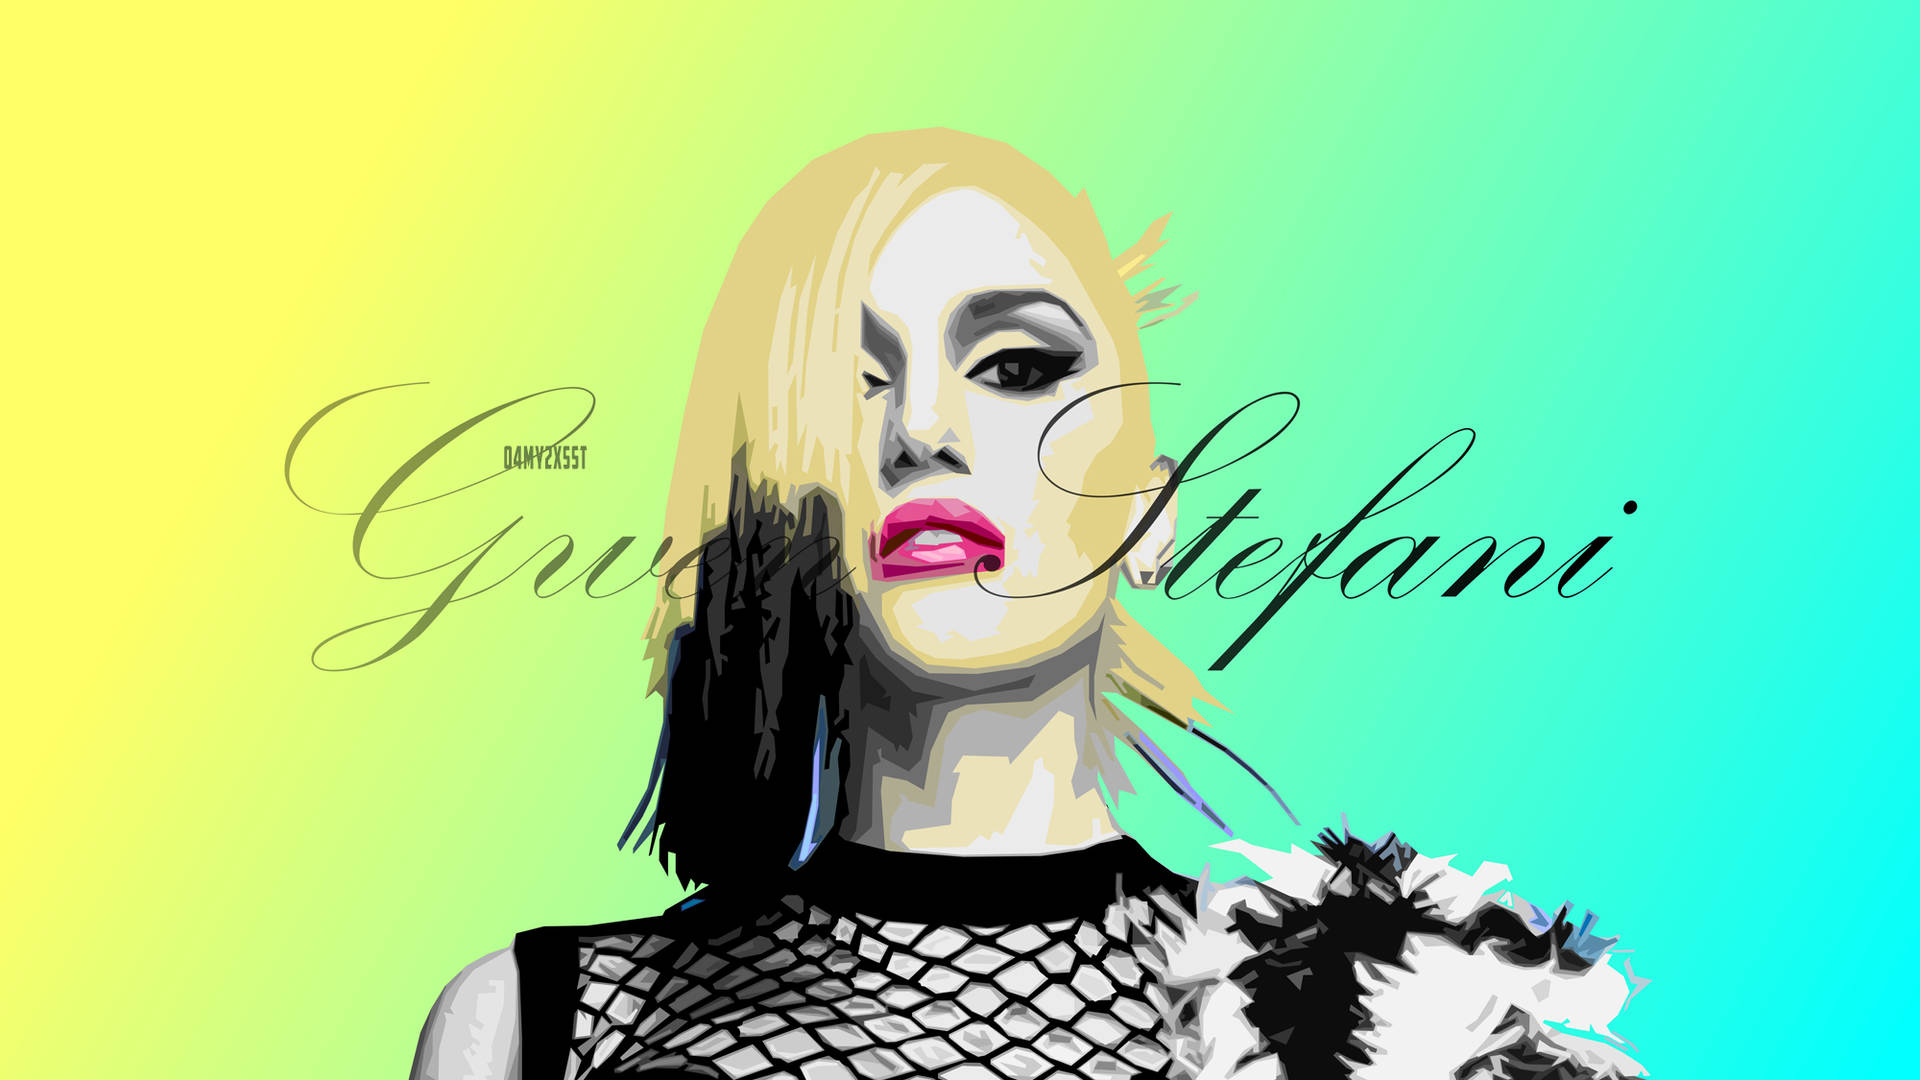 Gwen Stefani Pop Digital Art